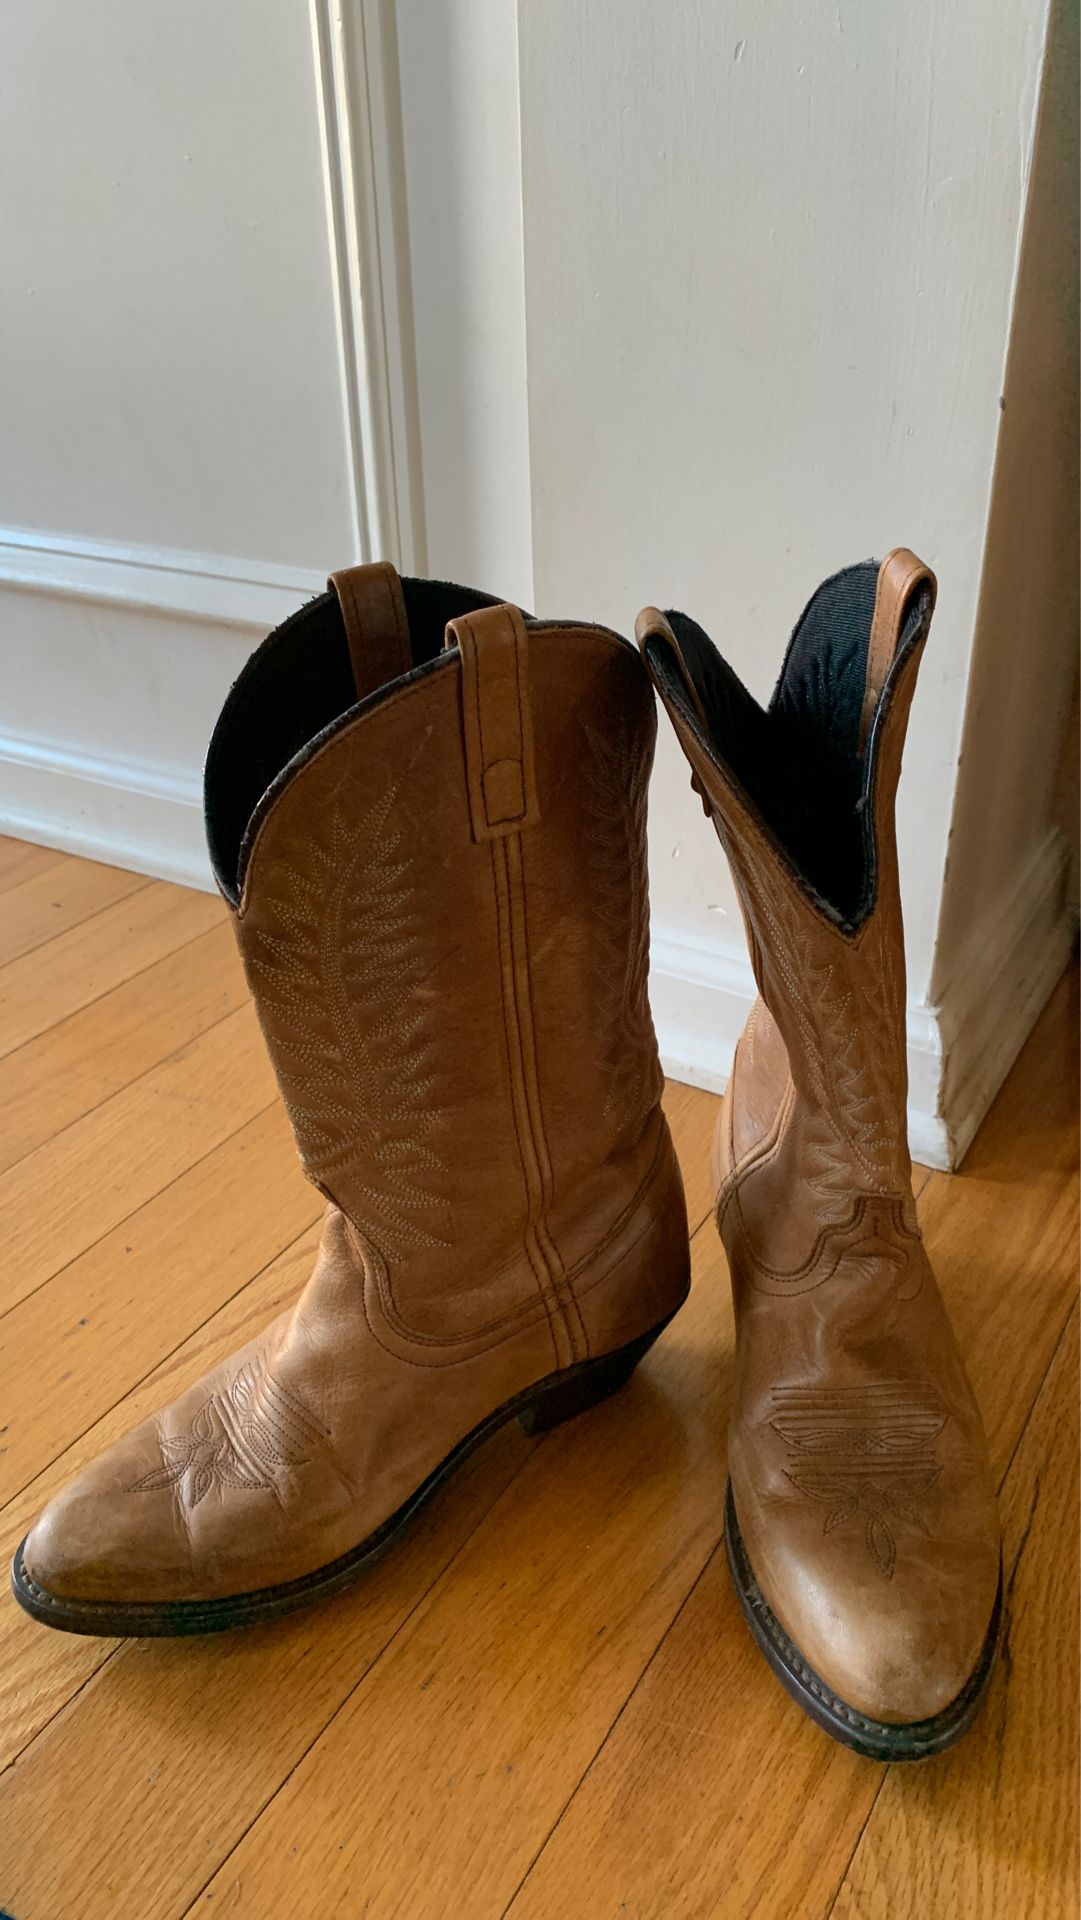 Laredo boots